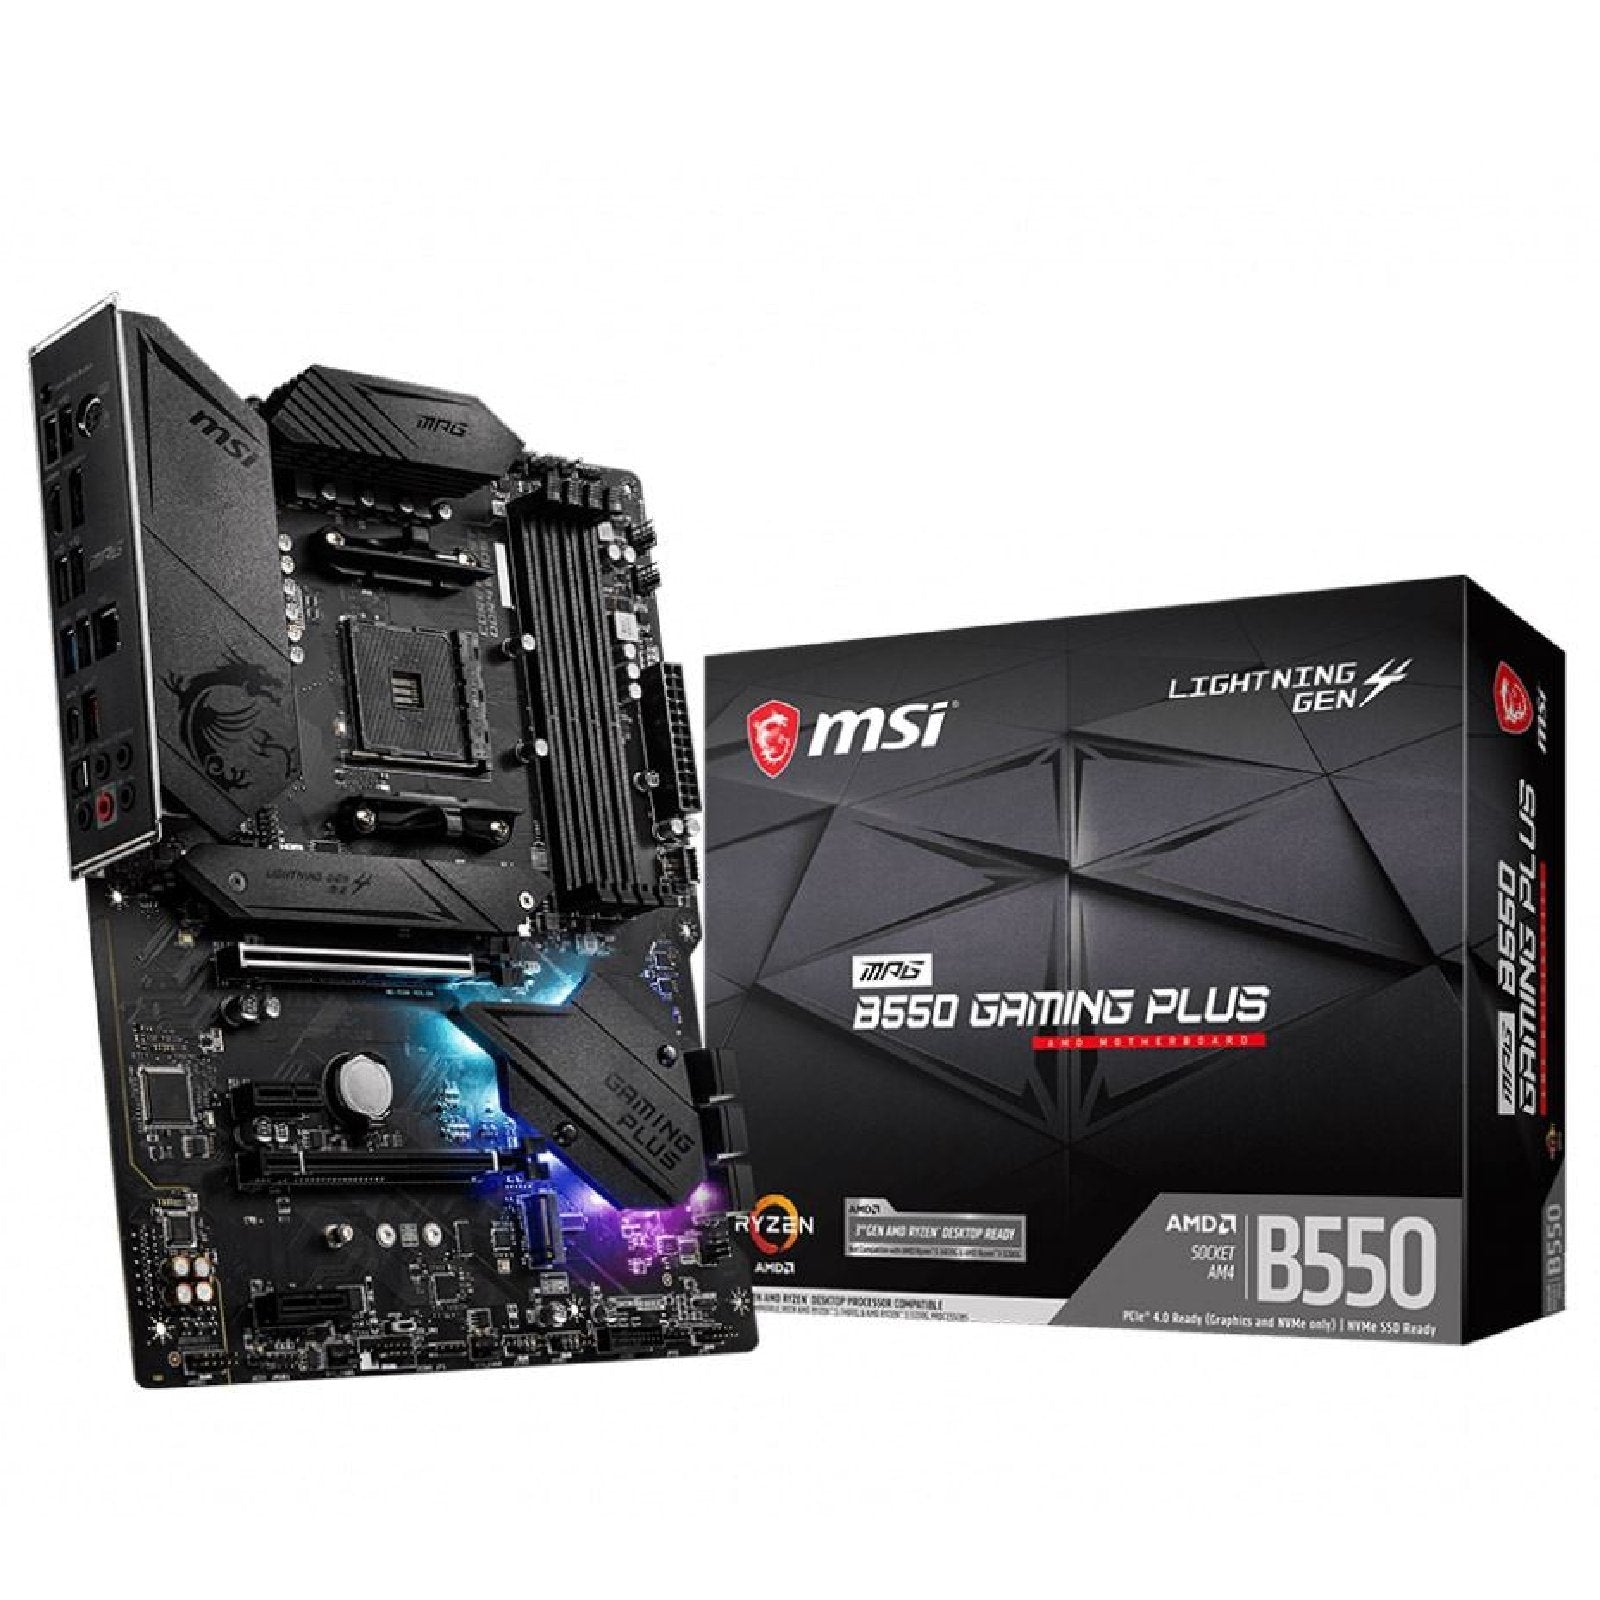 MSI MPG B550 Gaming Plus AMD AM4 ATX Motherboard - Store 974 | ستور ٩٧٤